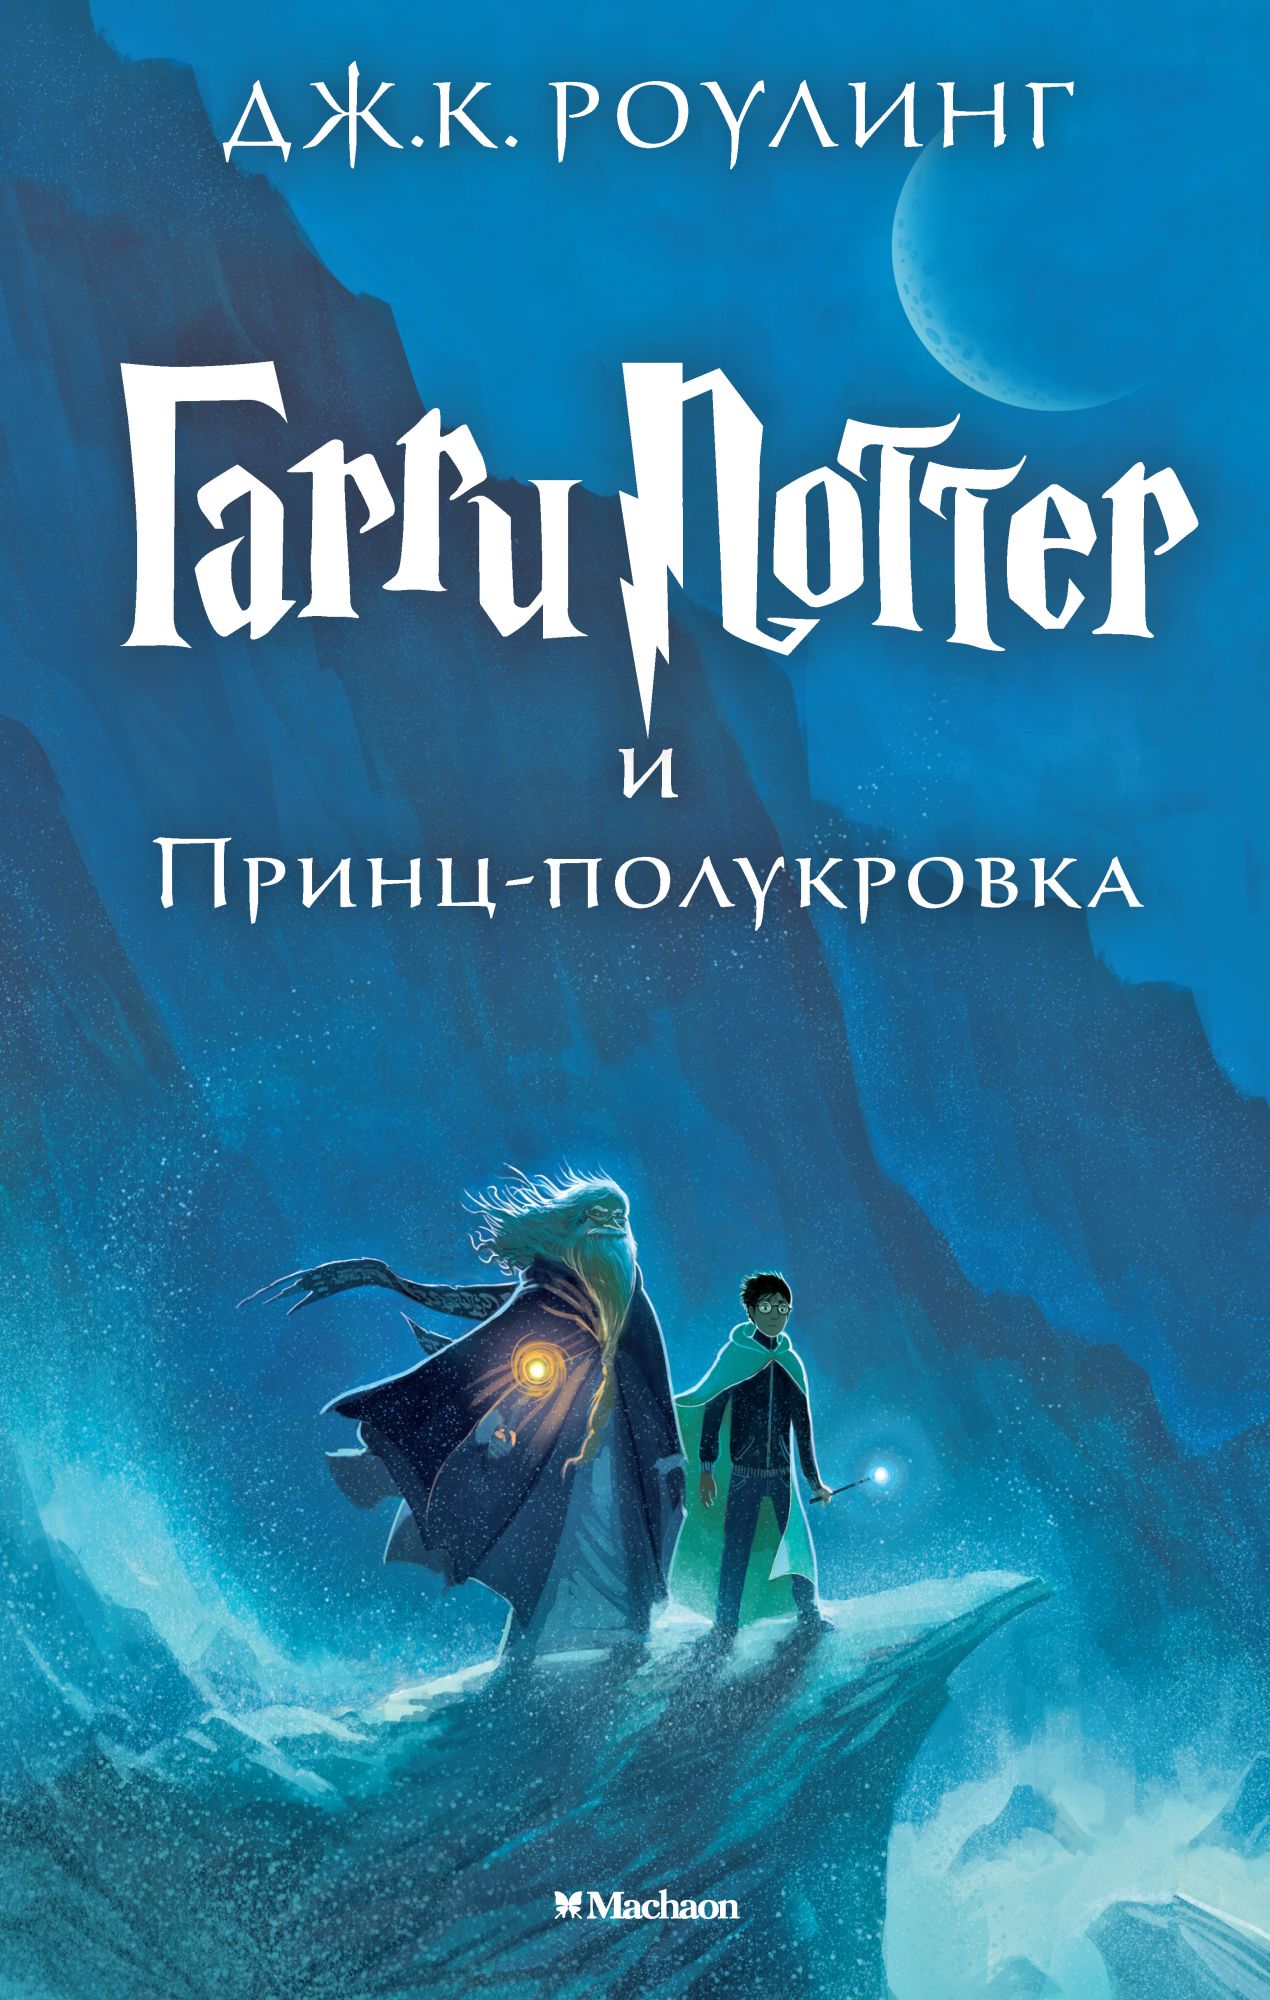 Book “Гарри Поттер и Принц-полукровка” by Дж.К. Роулинг — 2015